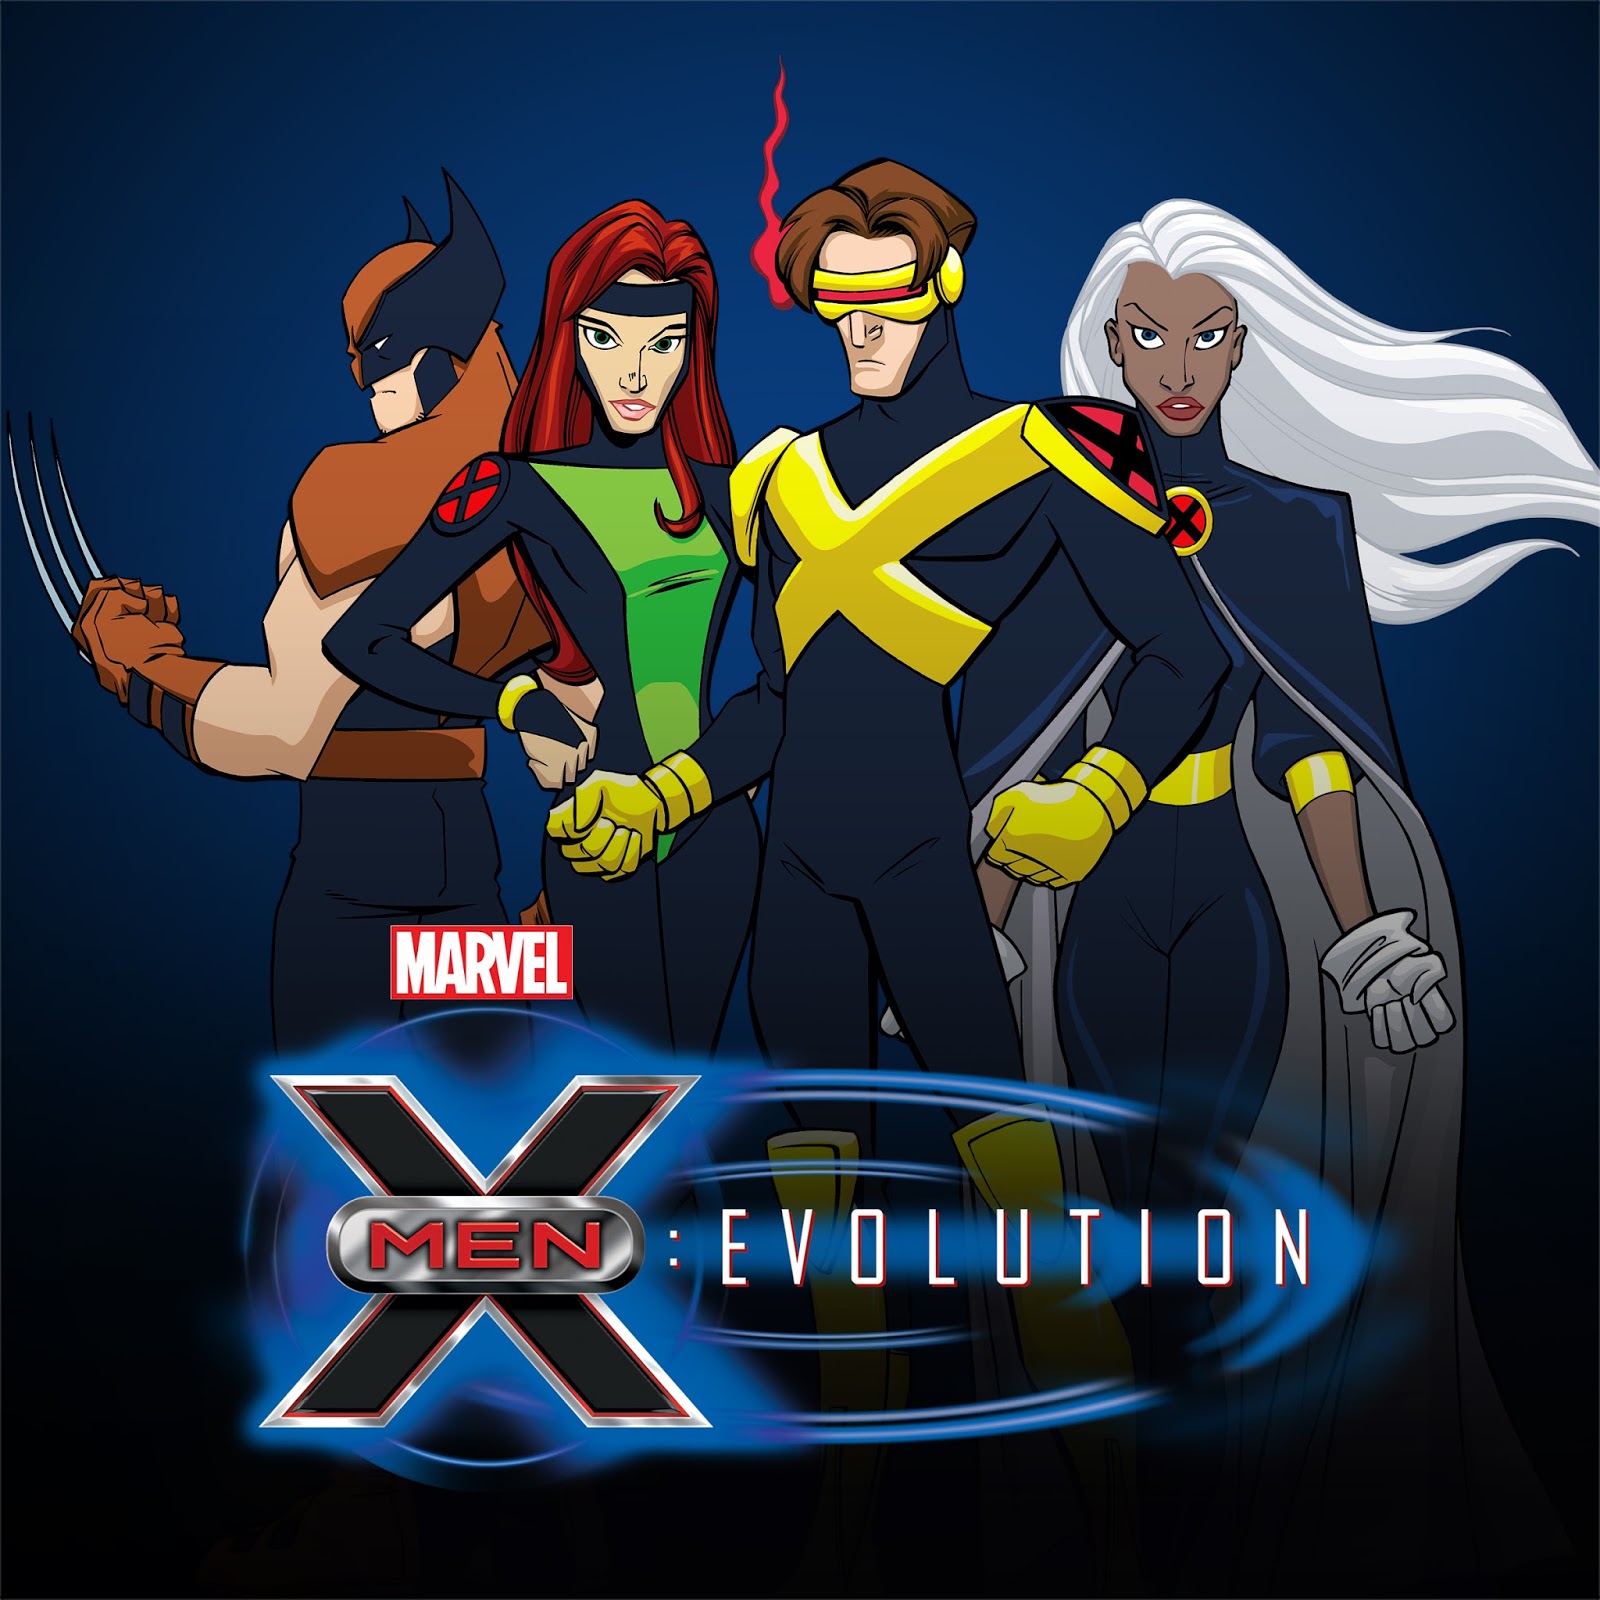 X-men: Evolution Pfp